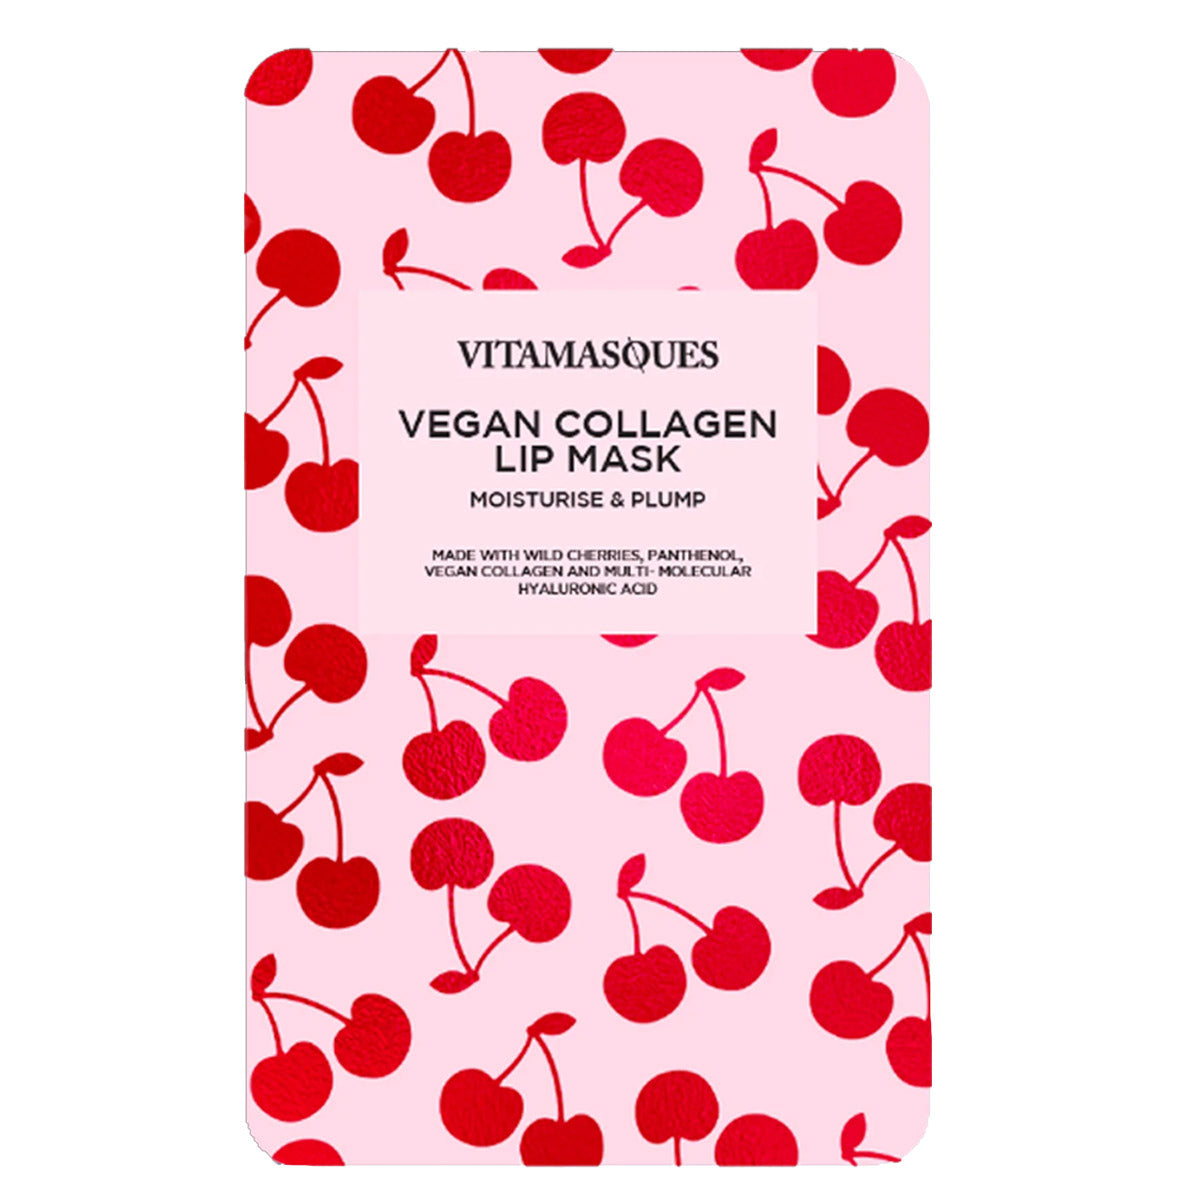 Vitamasques lipmas vegan collagen